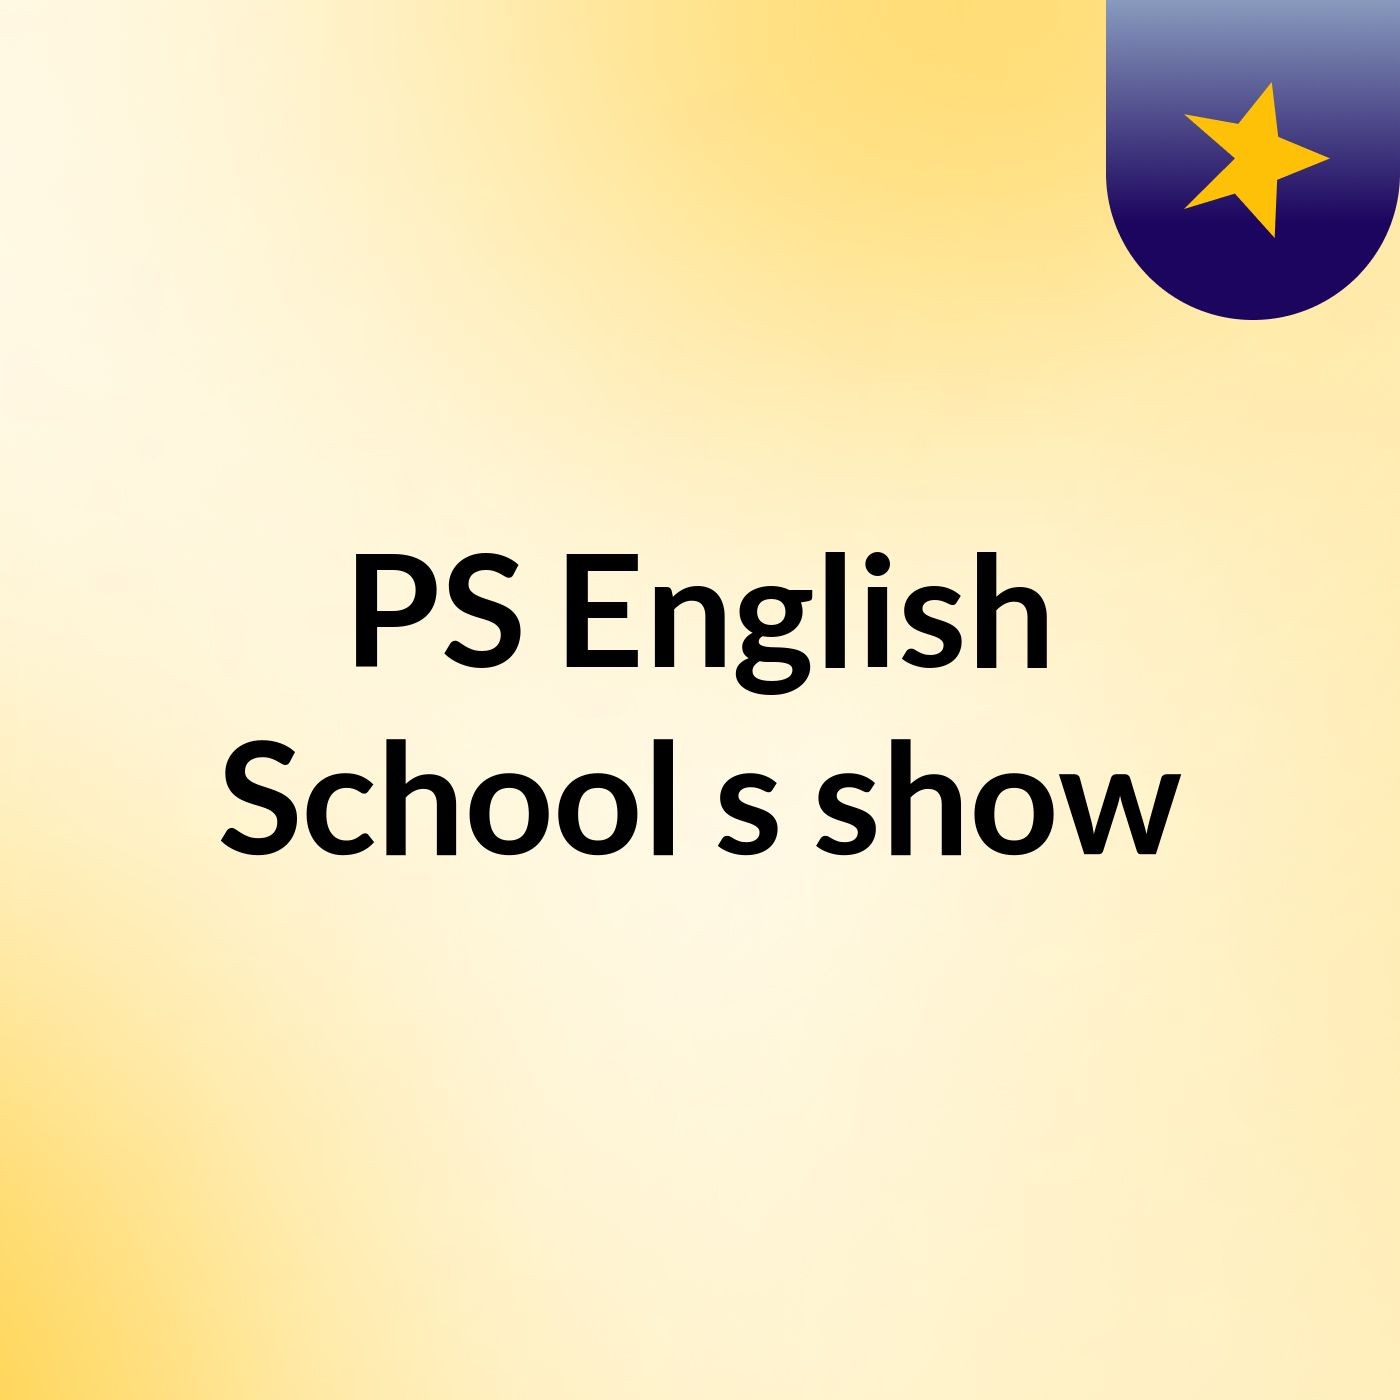 PS English School's show